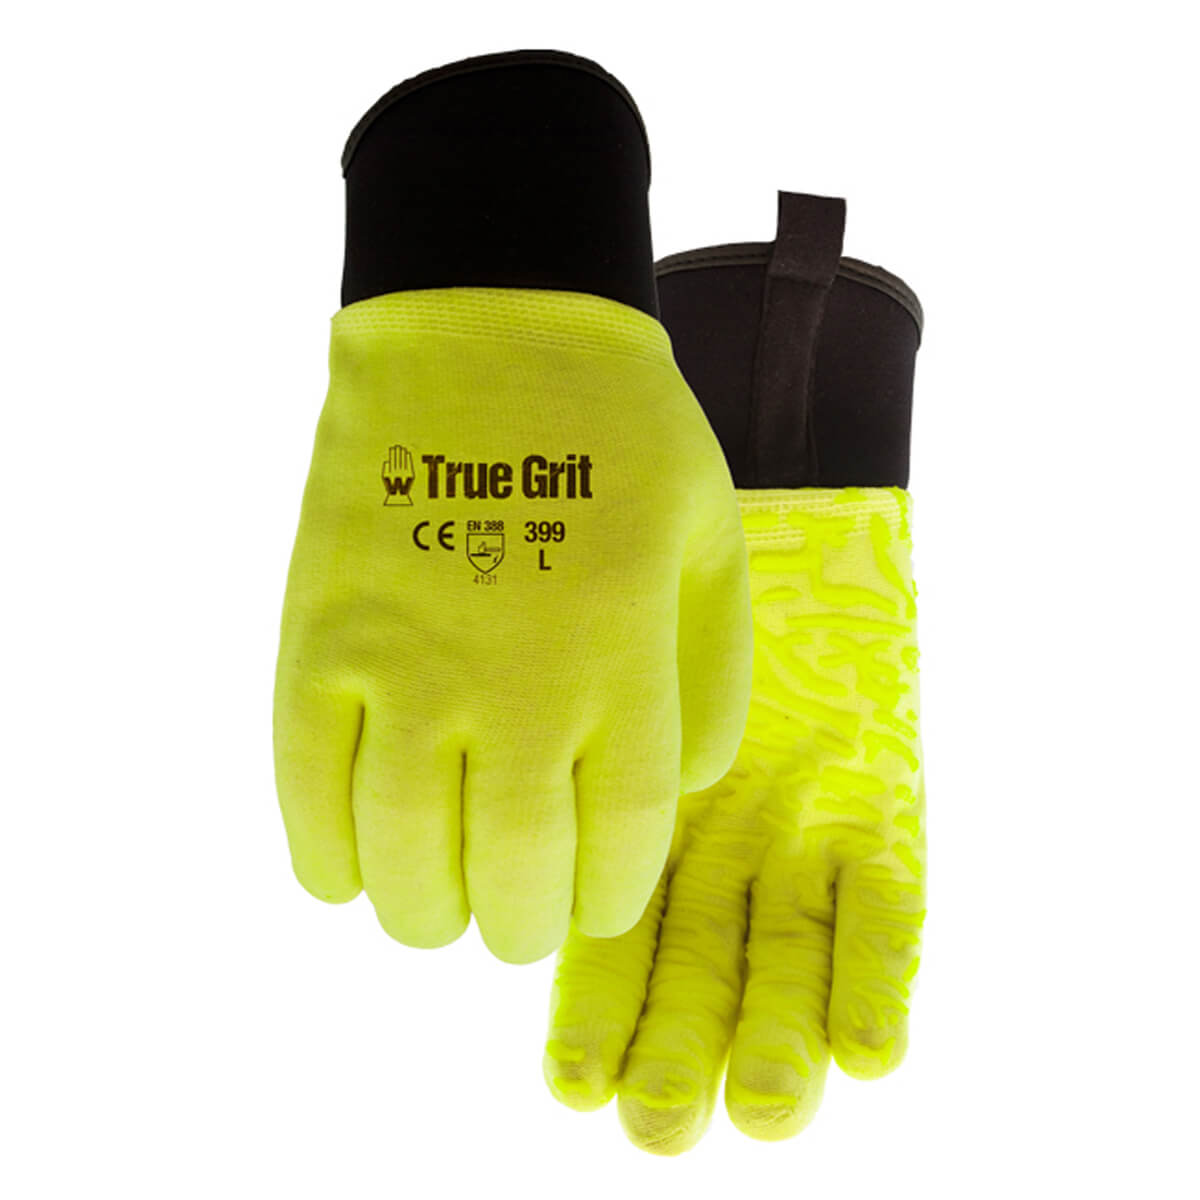 True Grit Gloves - L